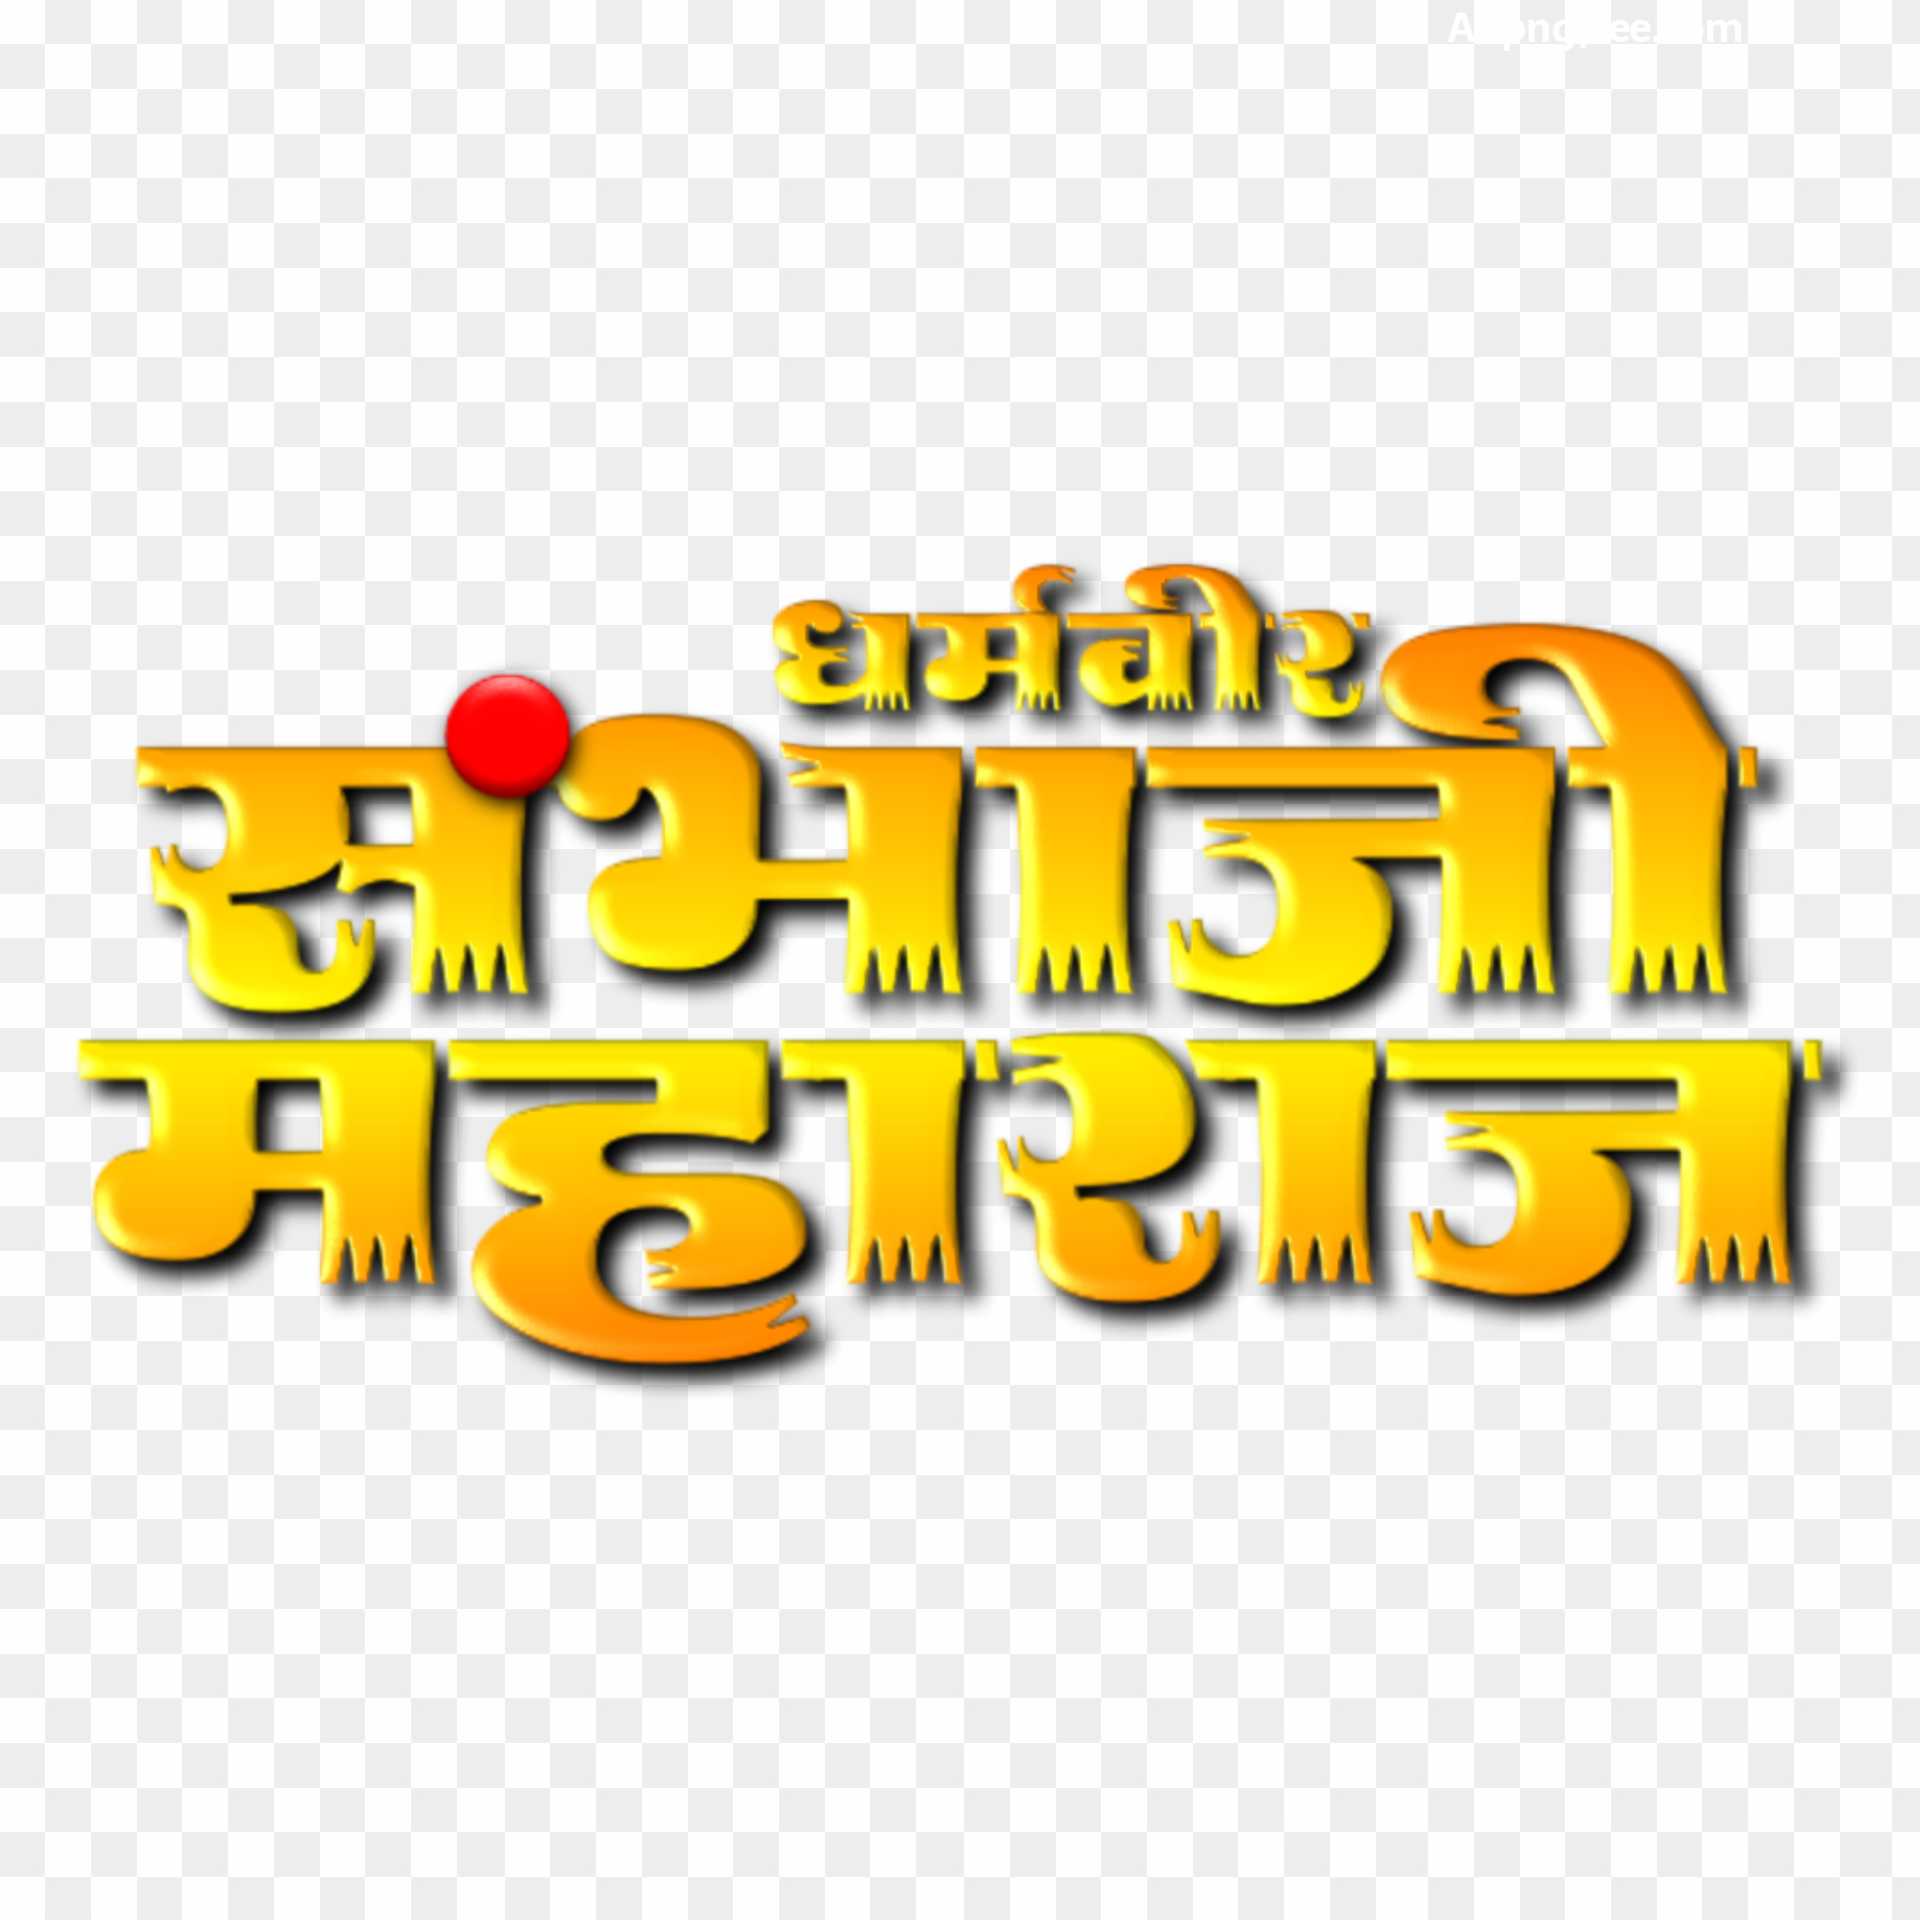 Dharmveer Sambhaji Maharaj png images download 